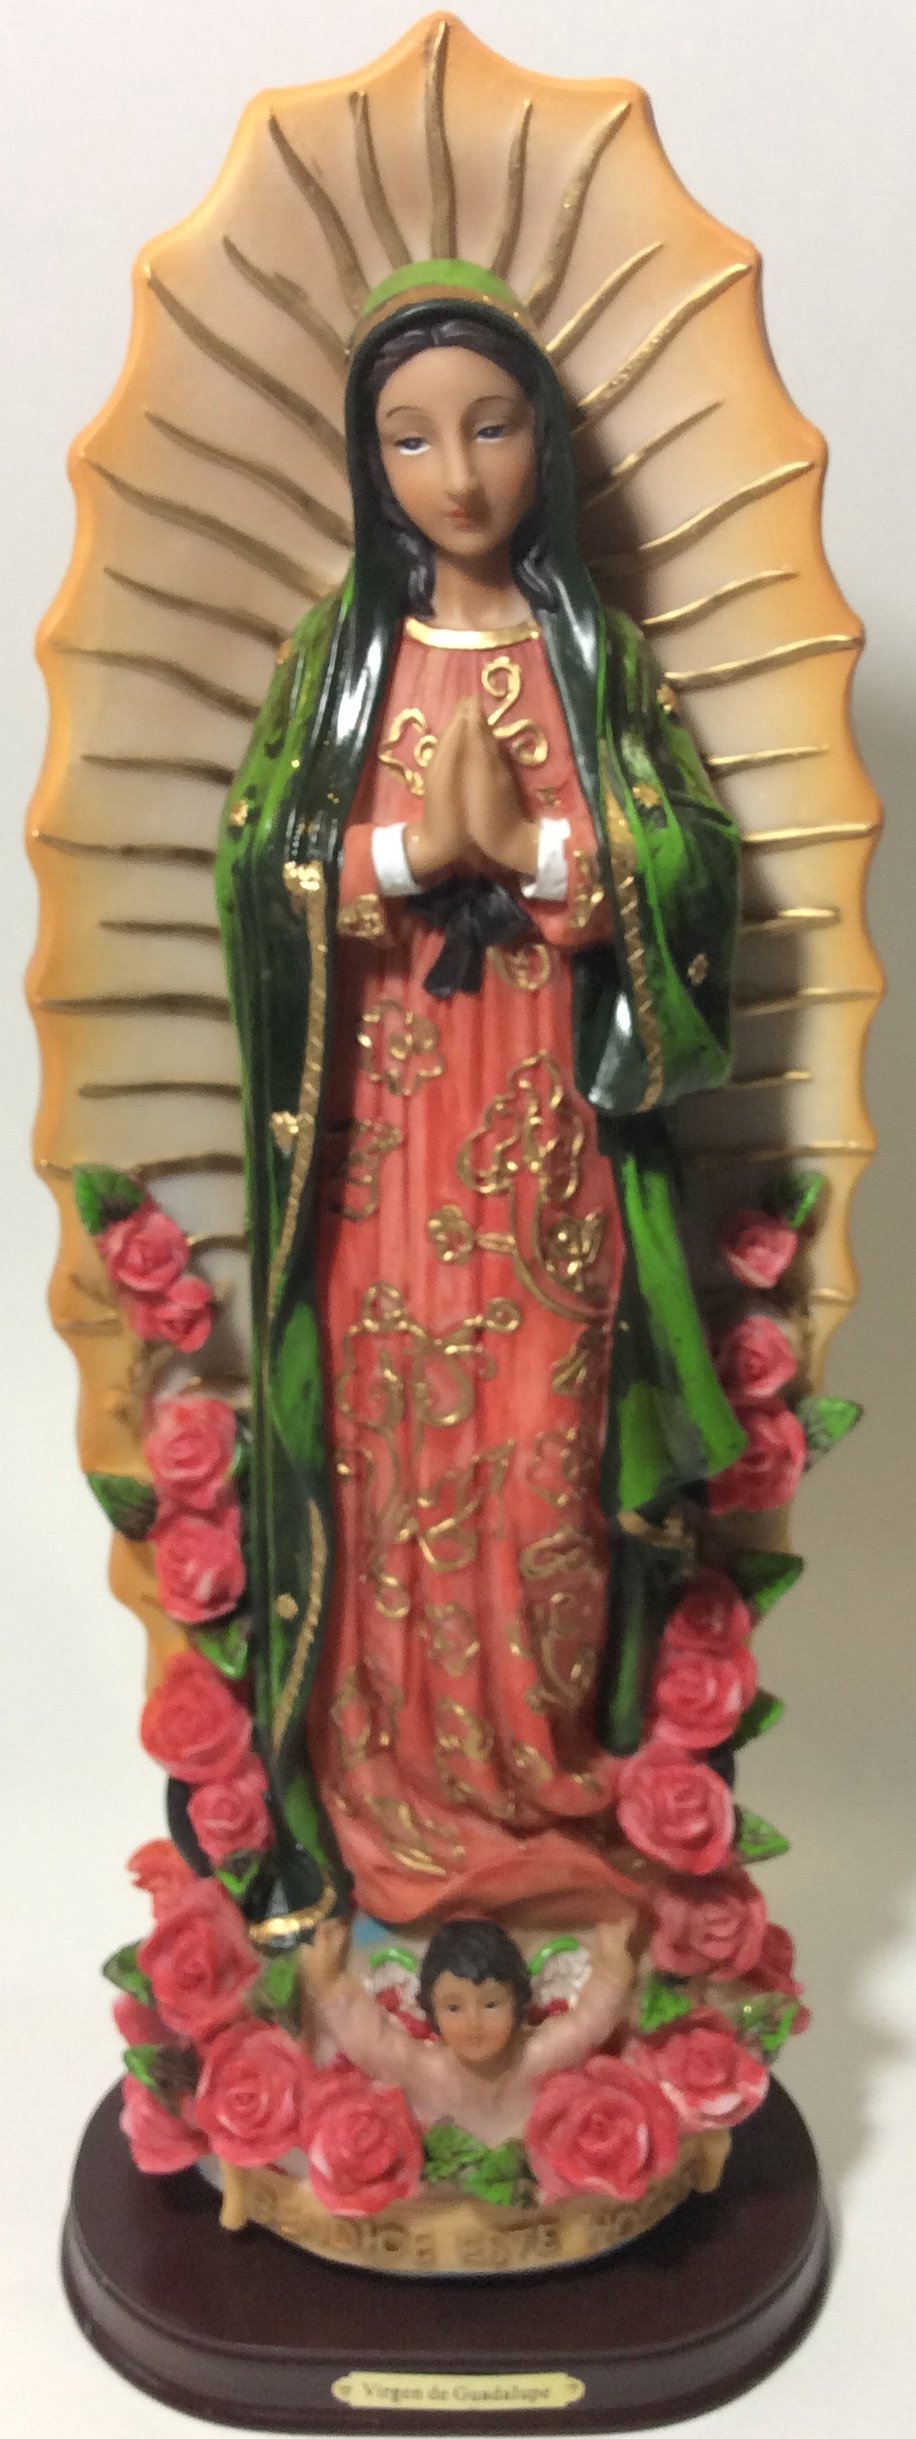 13" Our Lady of Guadalupe Virgin Mary Statue-virgen De Guadalupe-estatua 13"ne